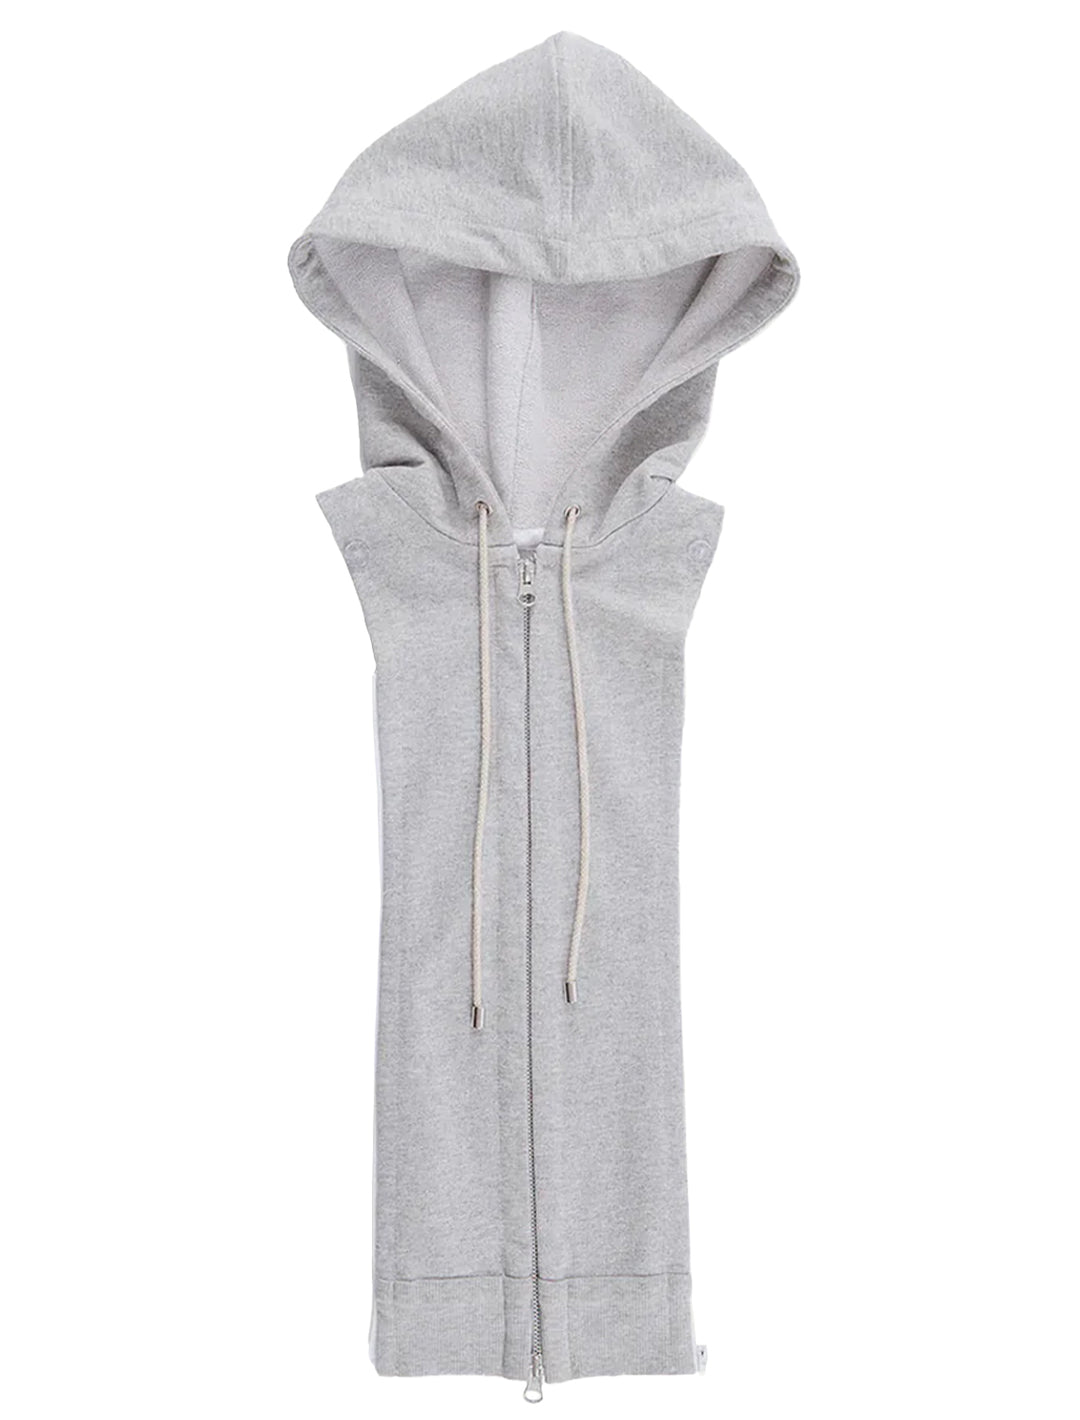 Front view of Veronica Beard's hoodie dickey in heather grey.